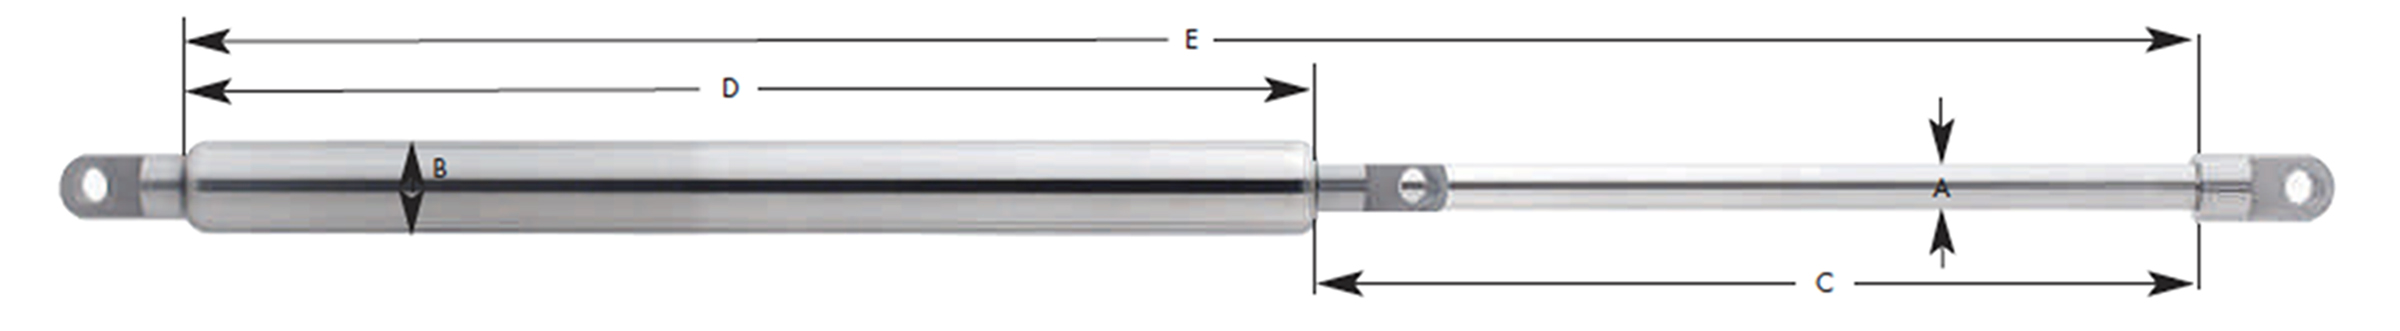 Adjustable Force Tension Gas Spring 1100-20